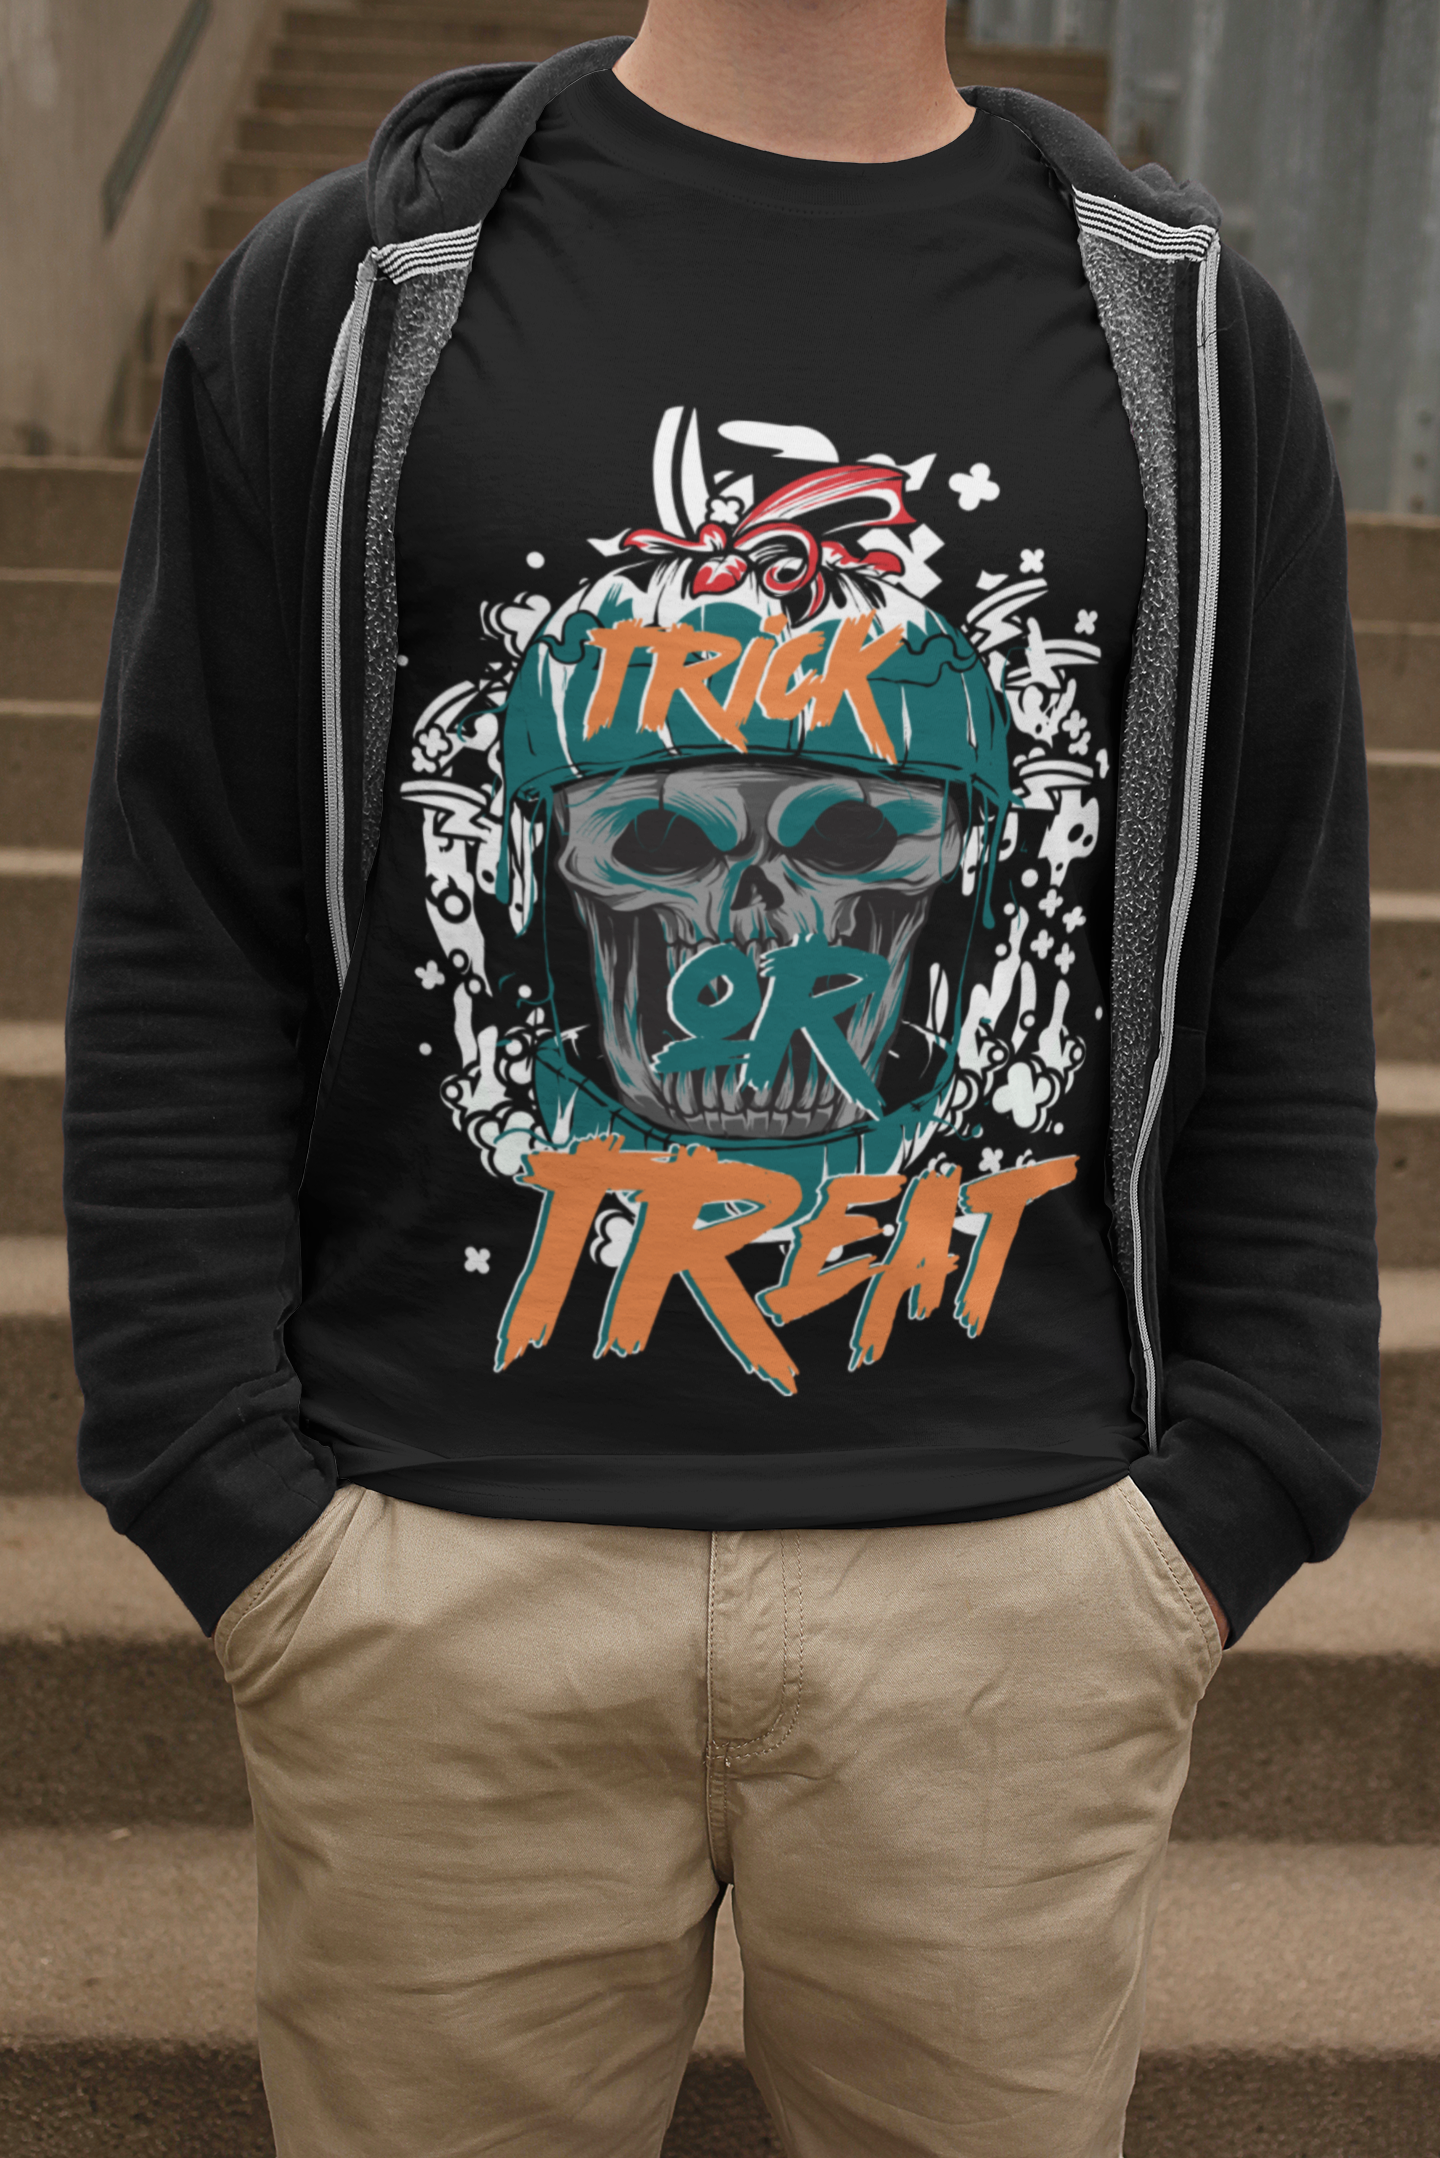 Skull Trick or Treat Black Halloween T-Shirt